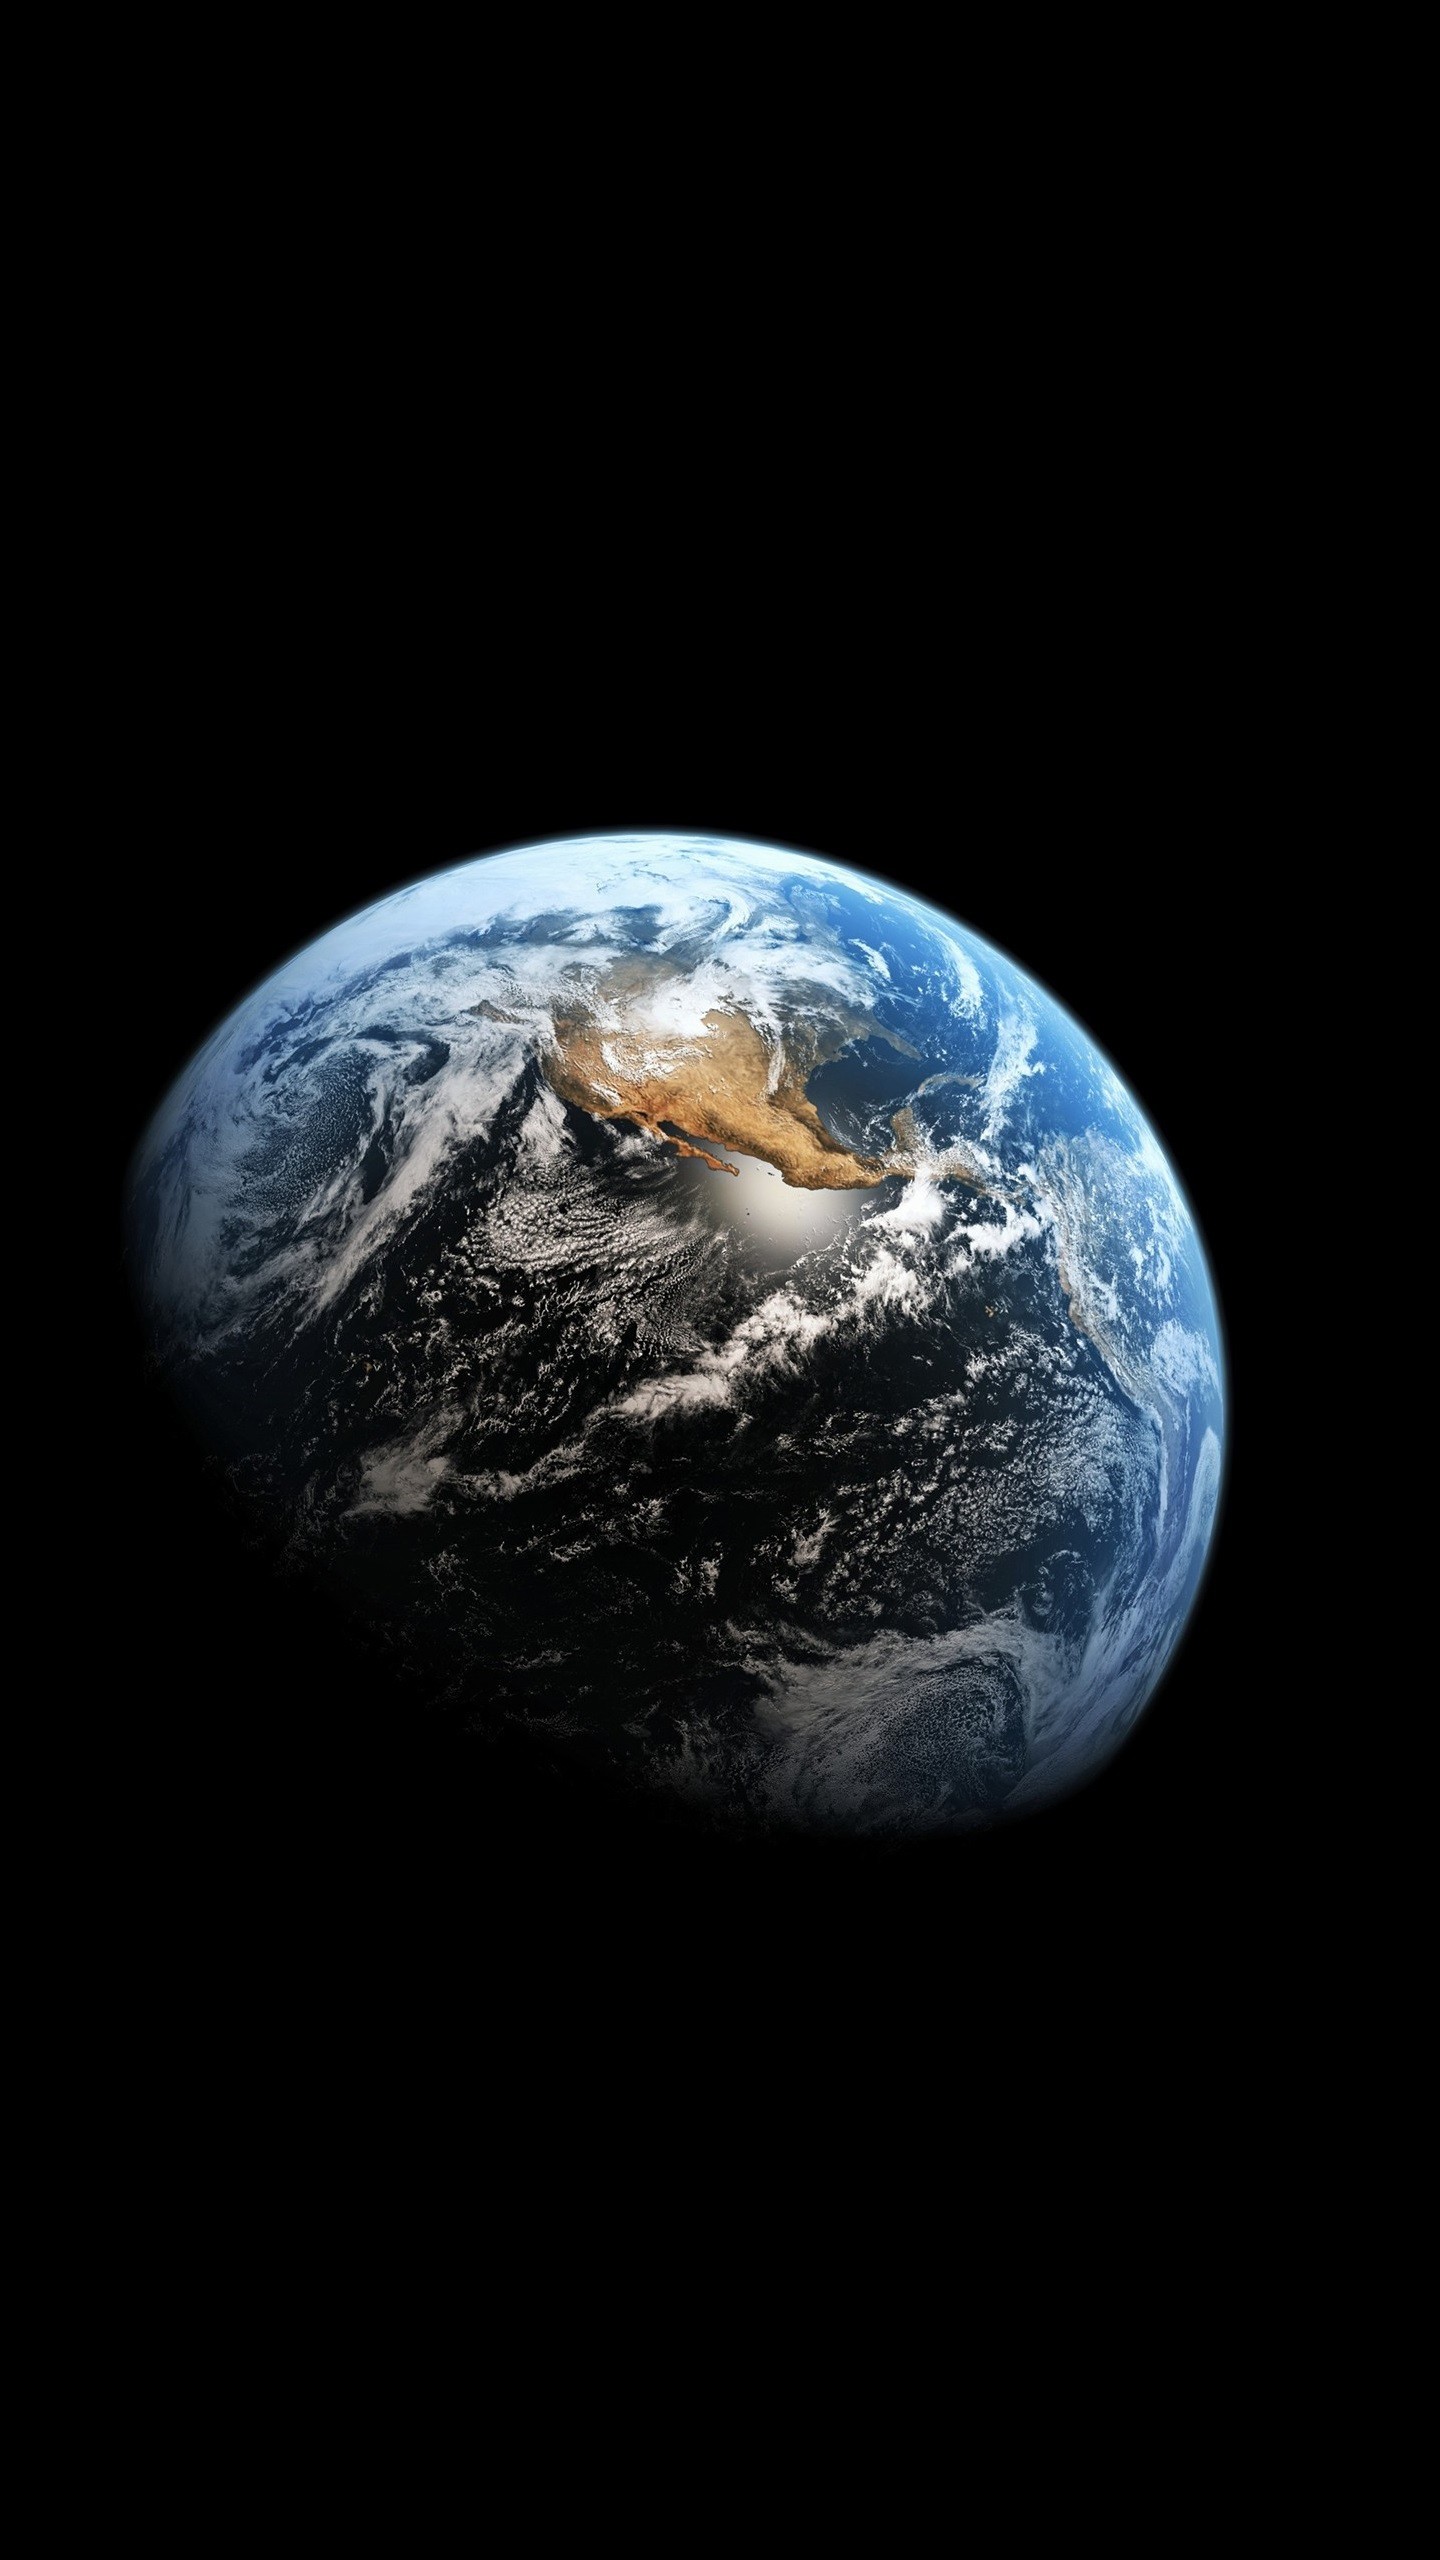 General 1440x2560 space space art planet digital art Earth portrait display simple background black background